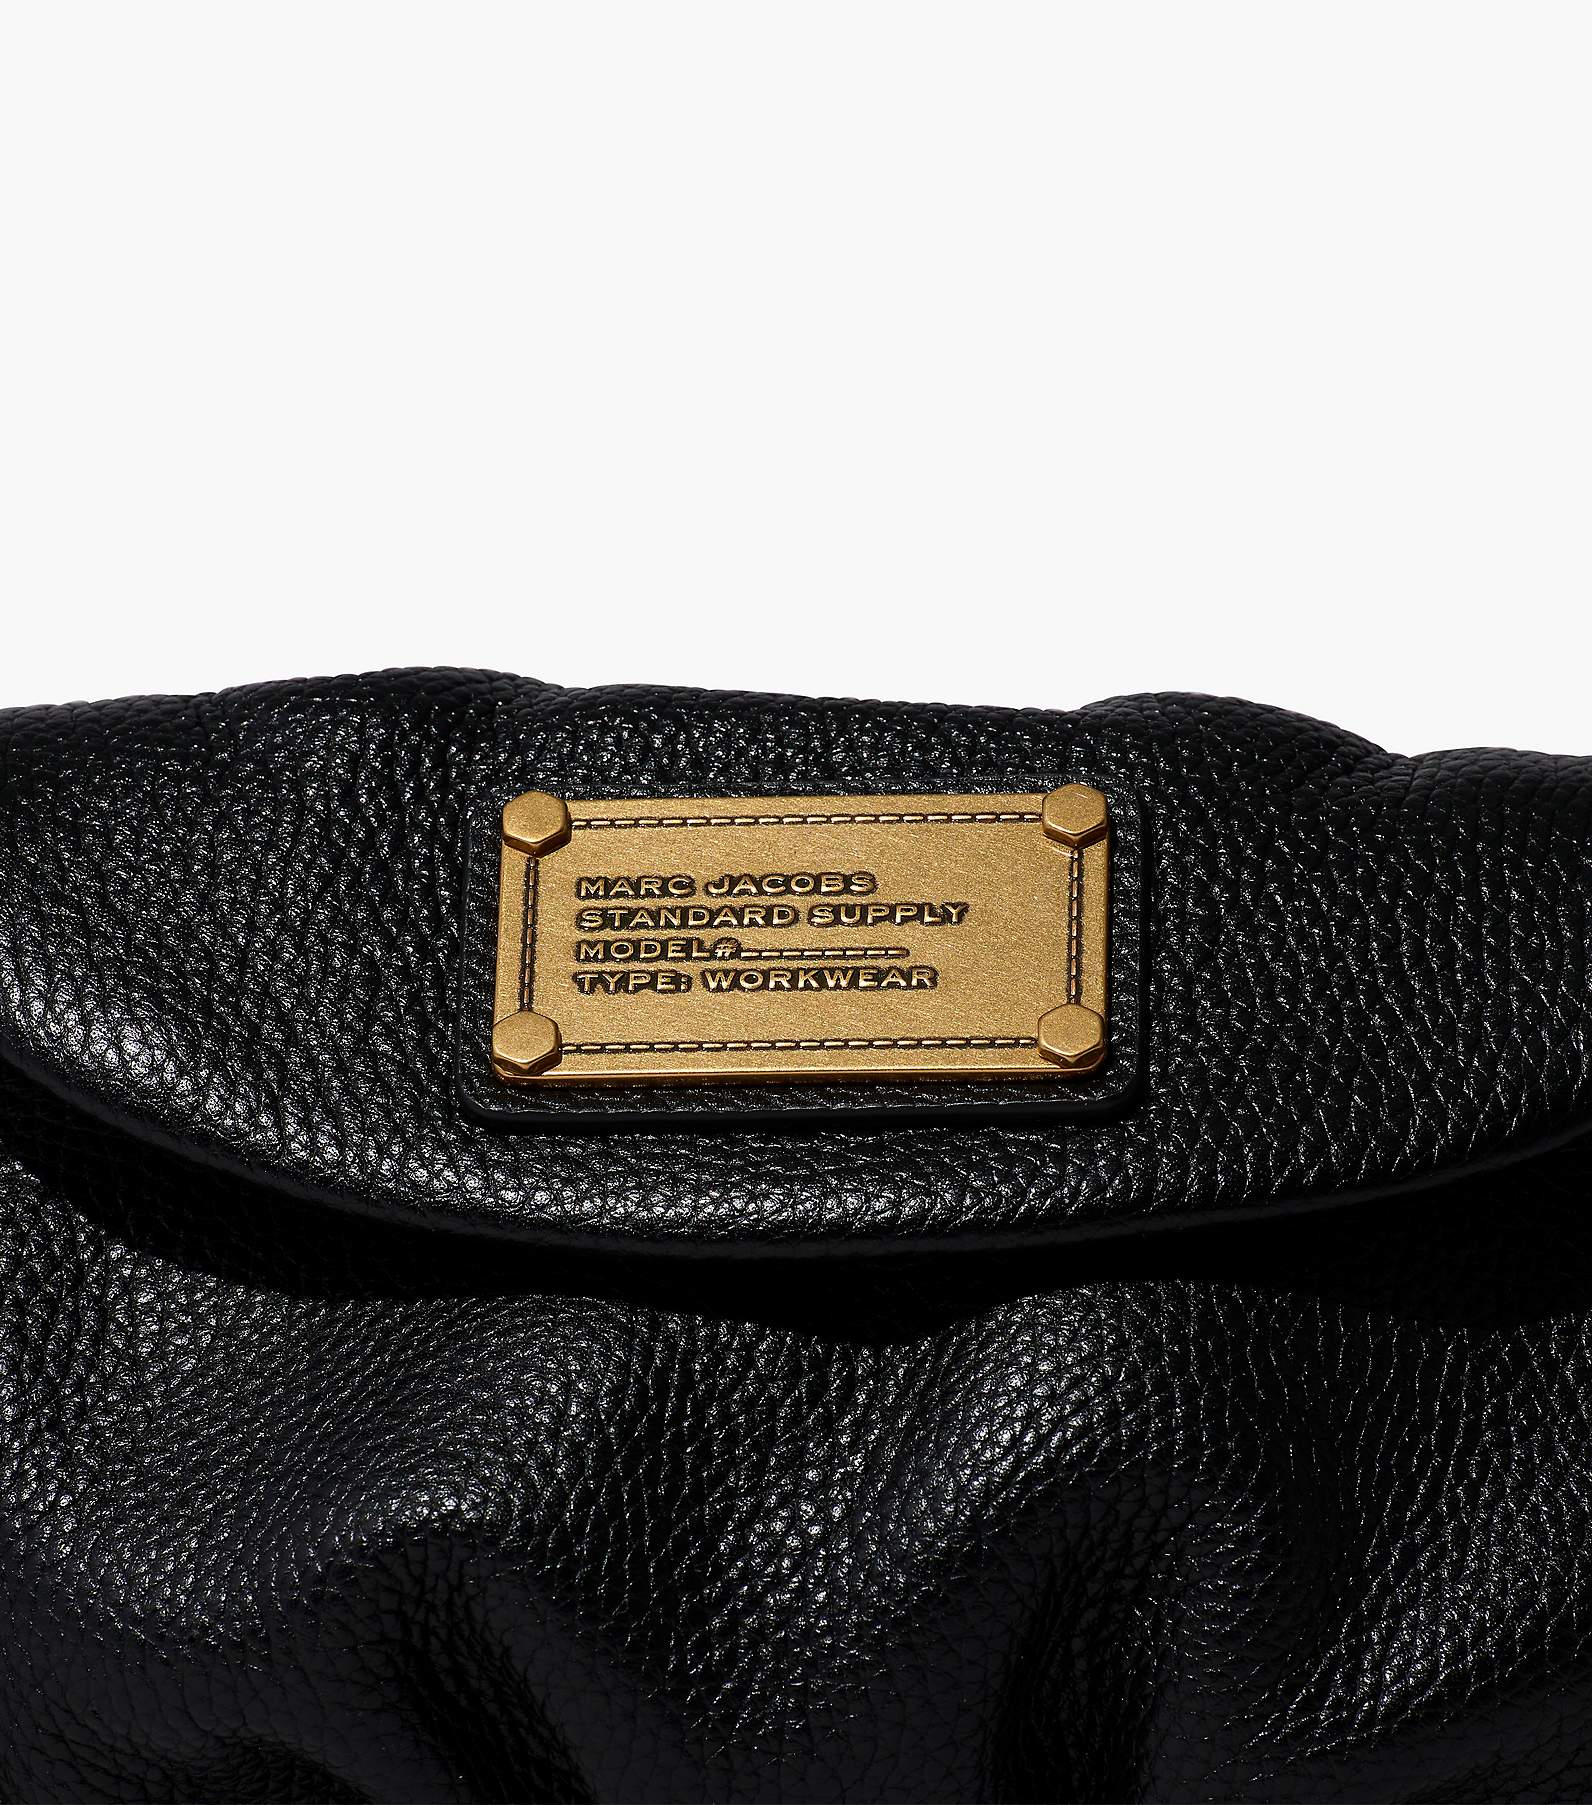 marc by marc jacobs bag wristlet Clutch Bag Purse Standard Supply Type Work  Wear